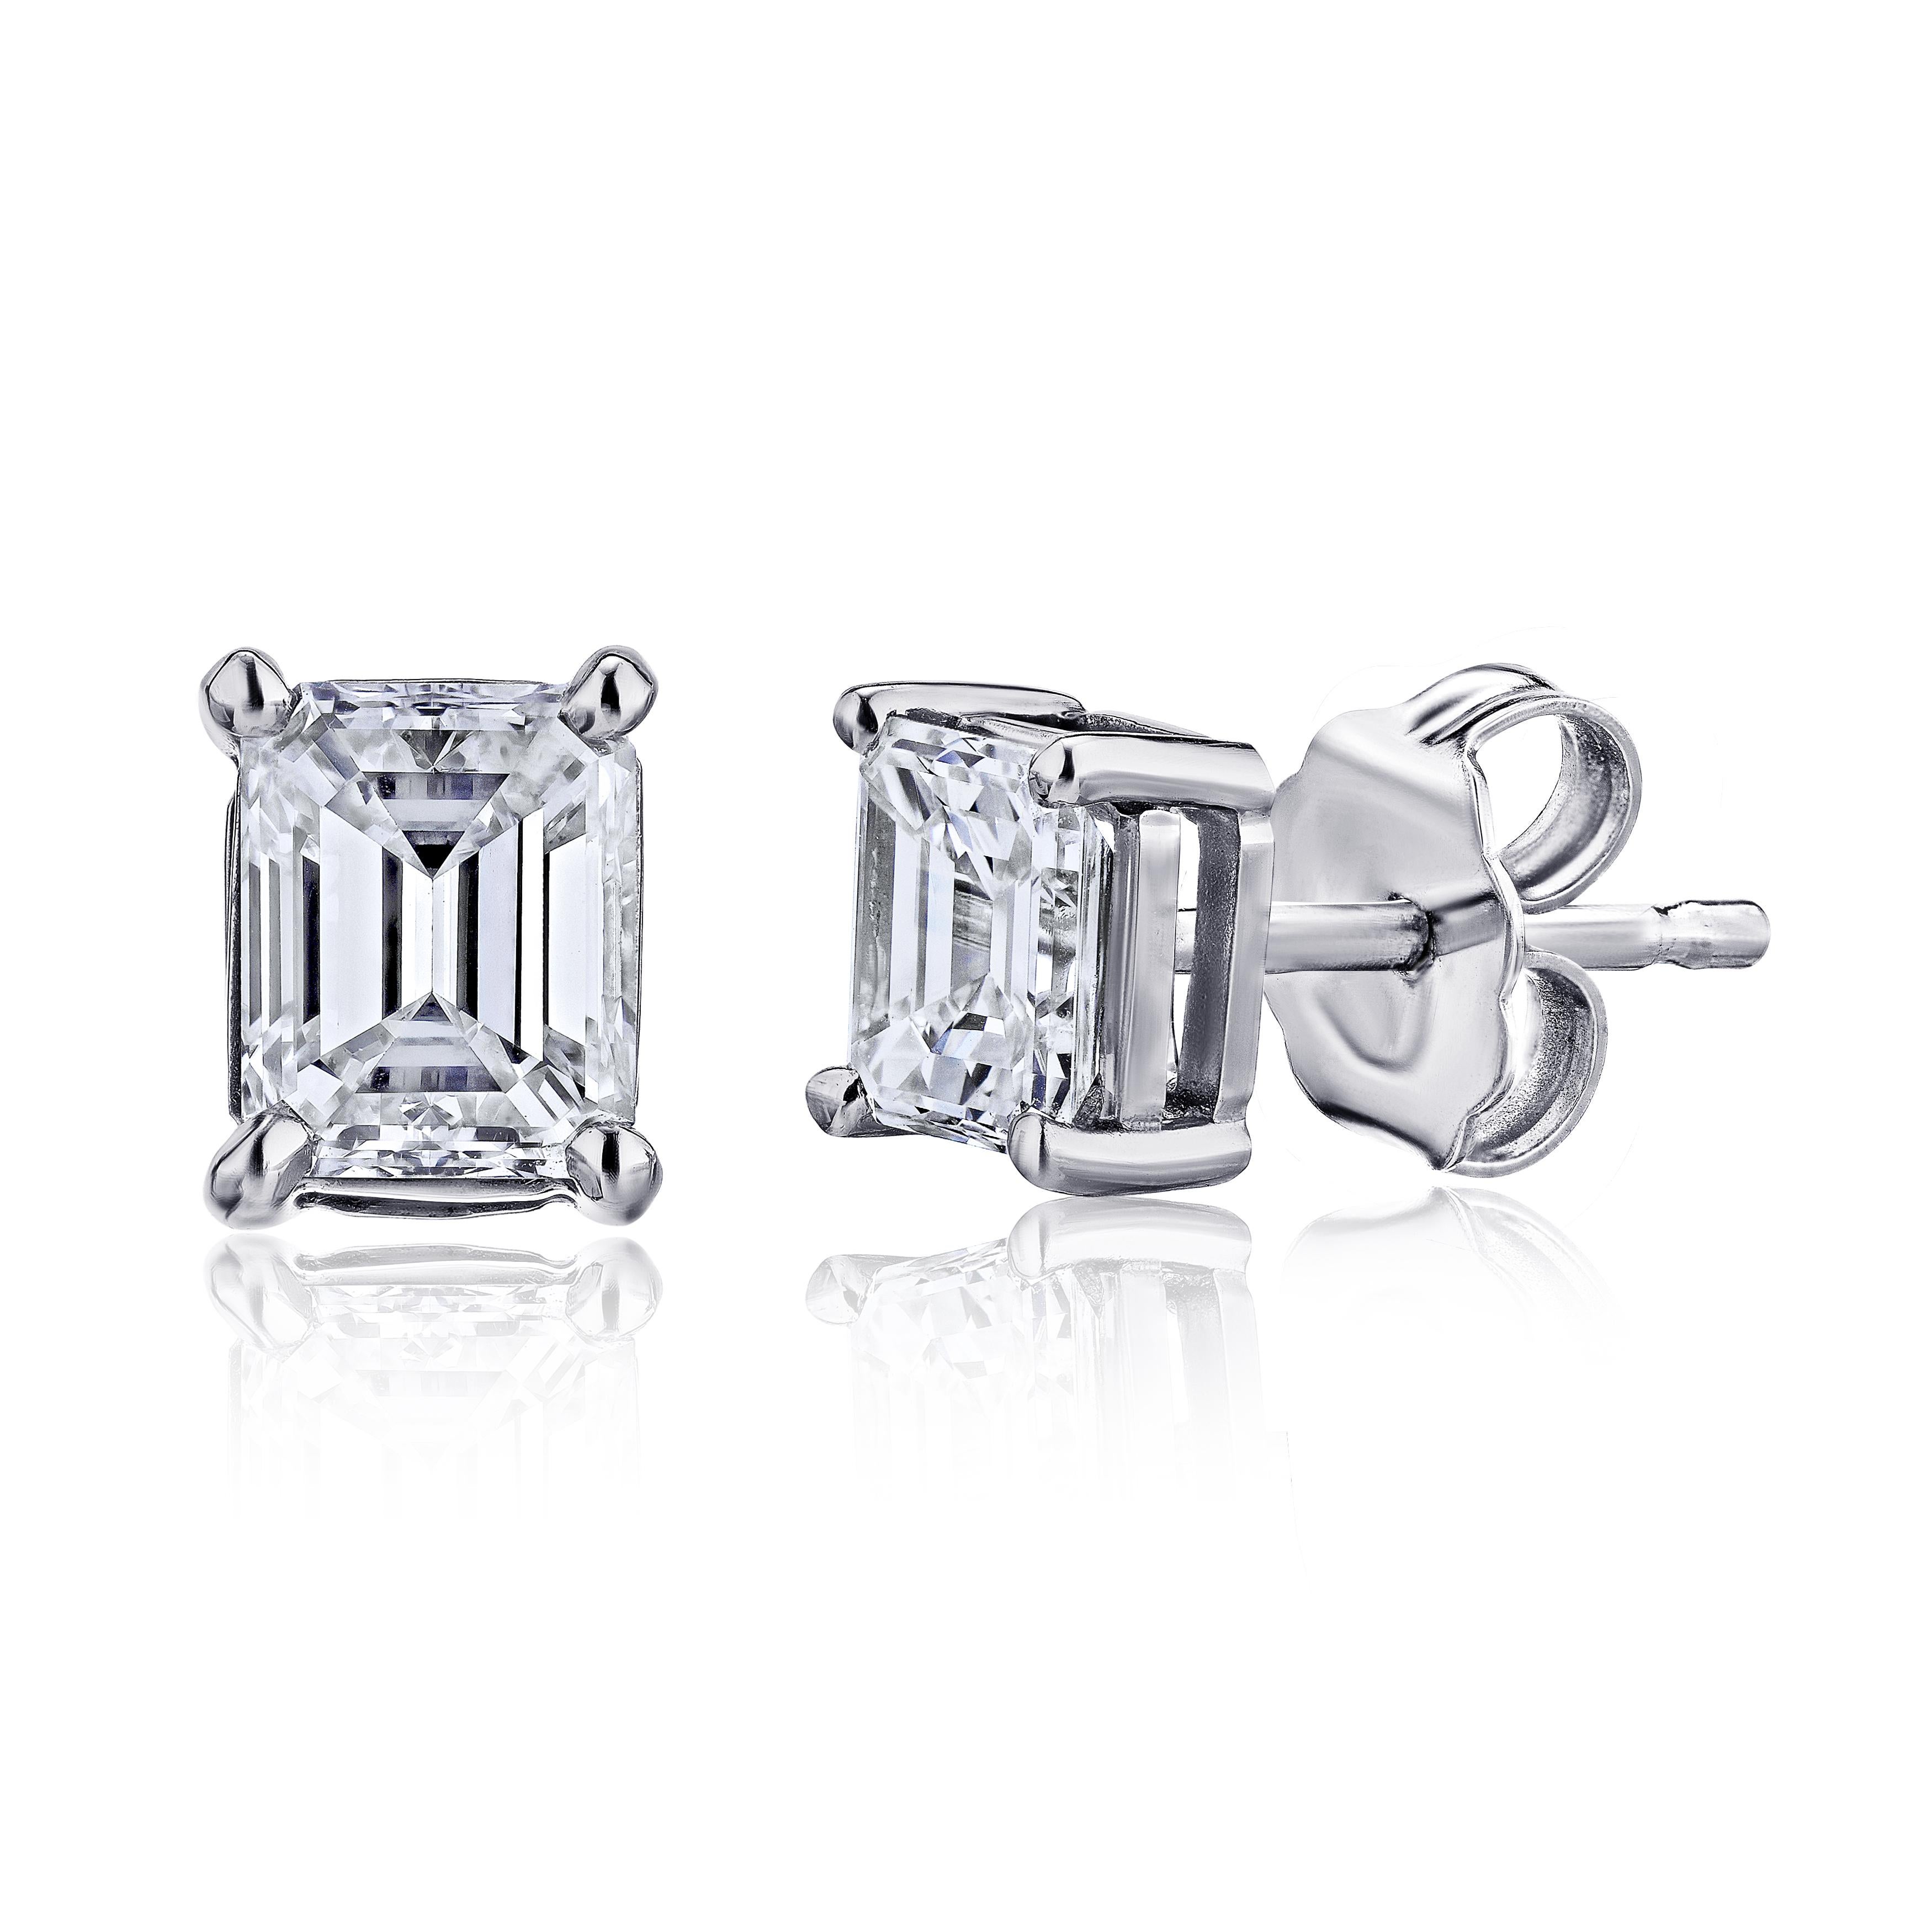 12 carat diamond earrings